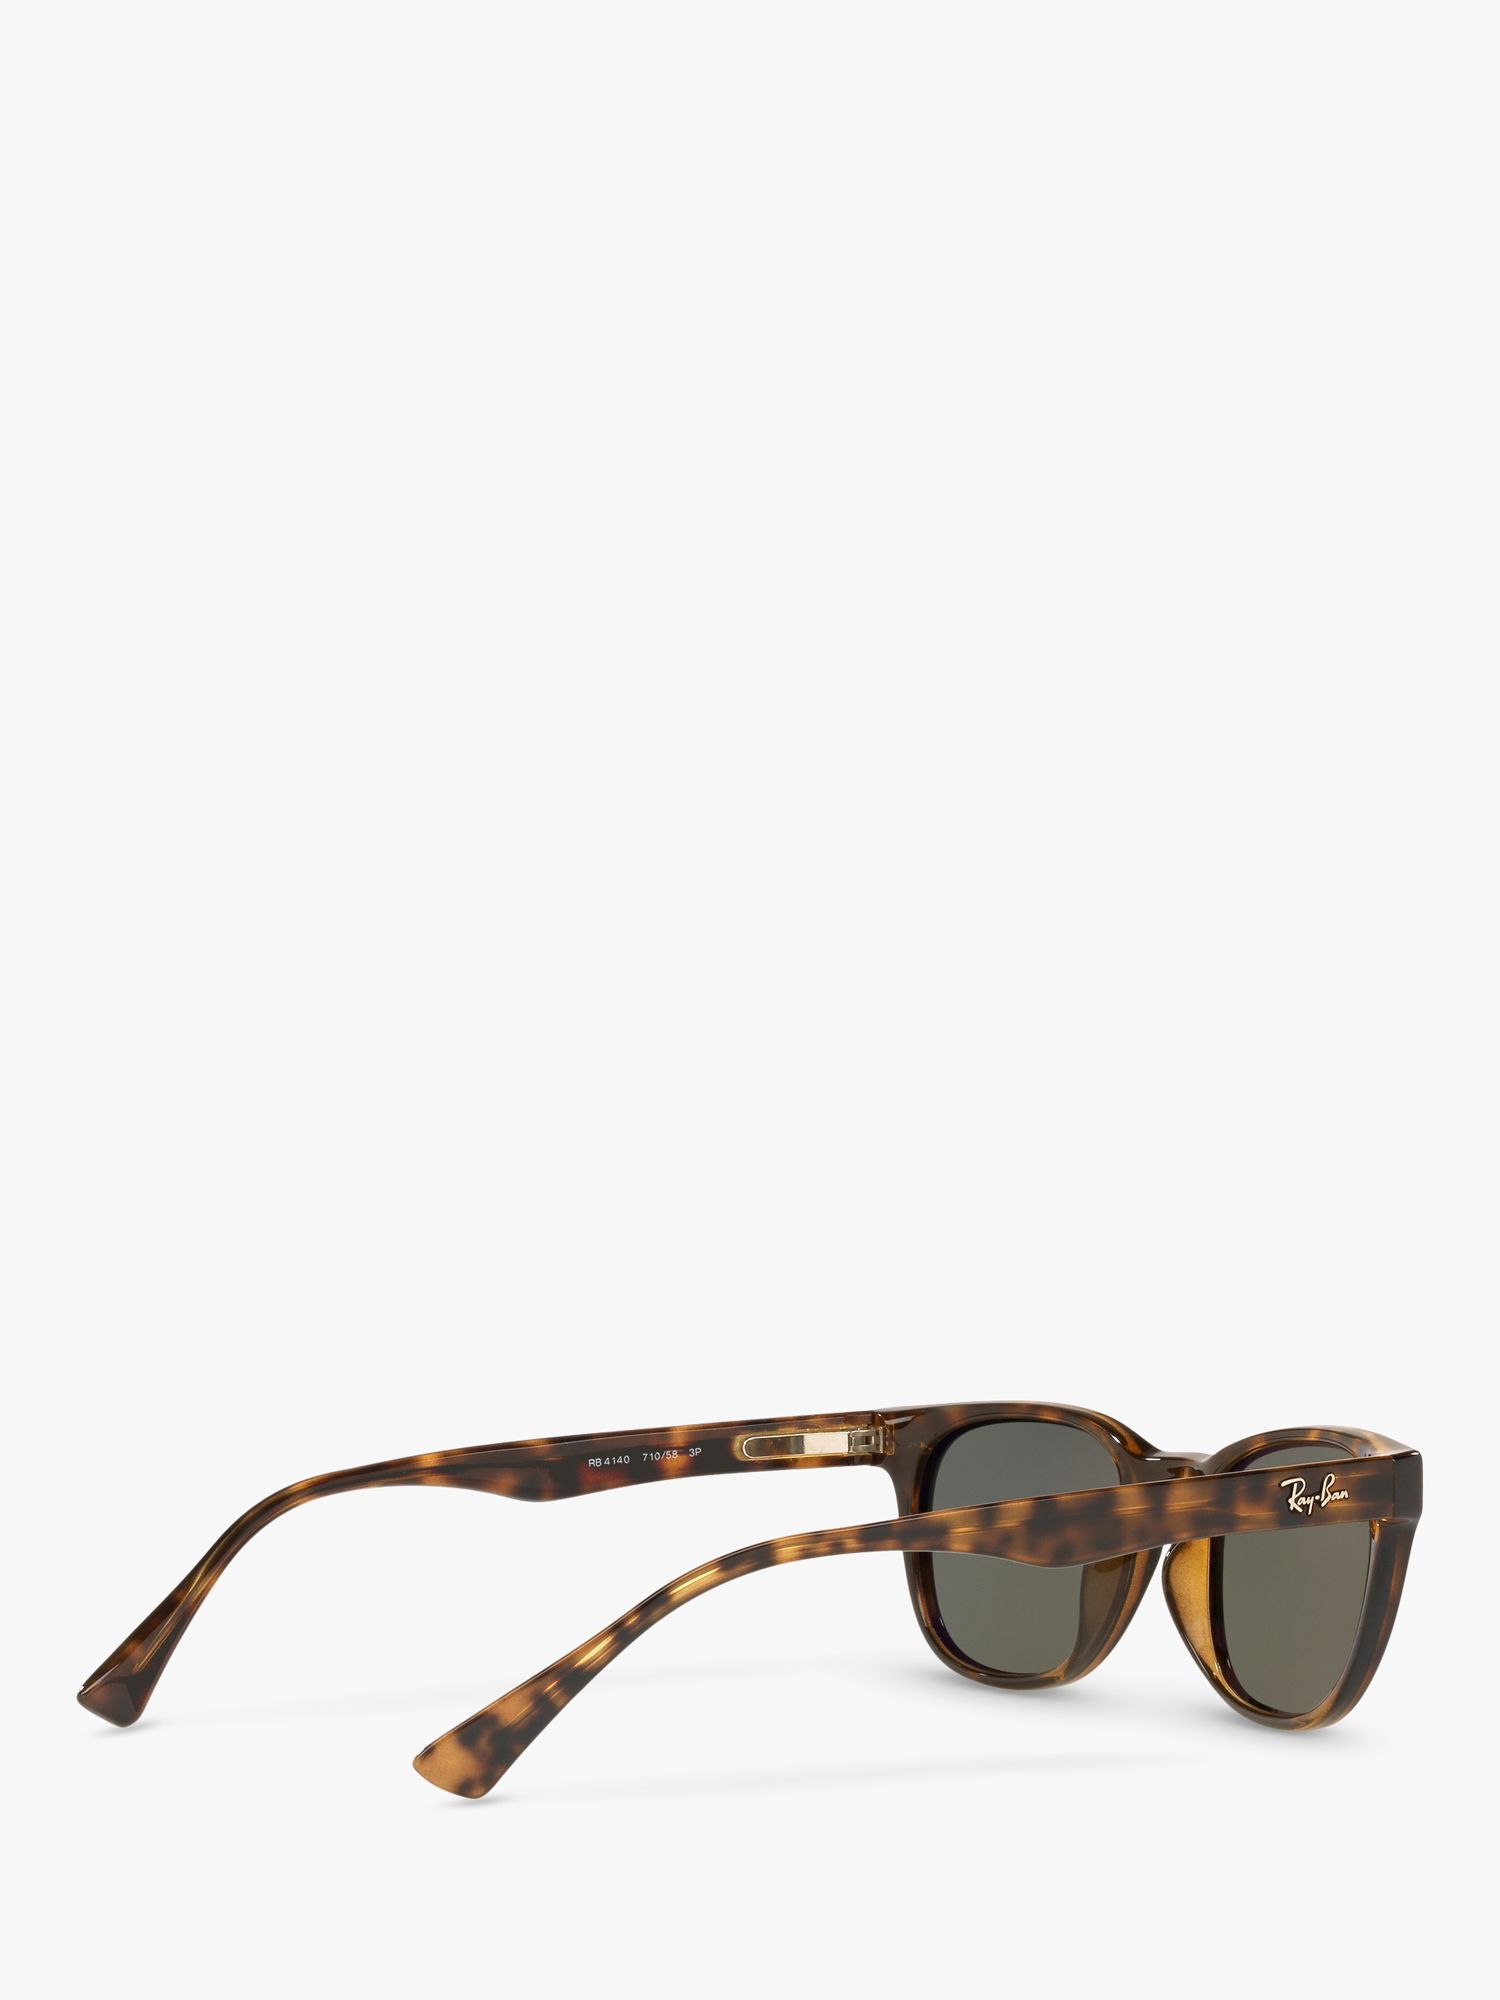 Ray-Ban RB4140 Women's Polarised Square Sunglasses, Tortoise/Grey